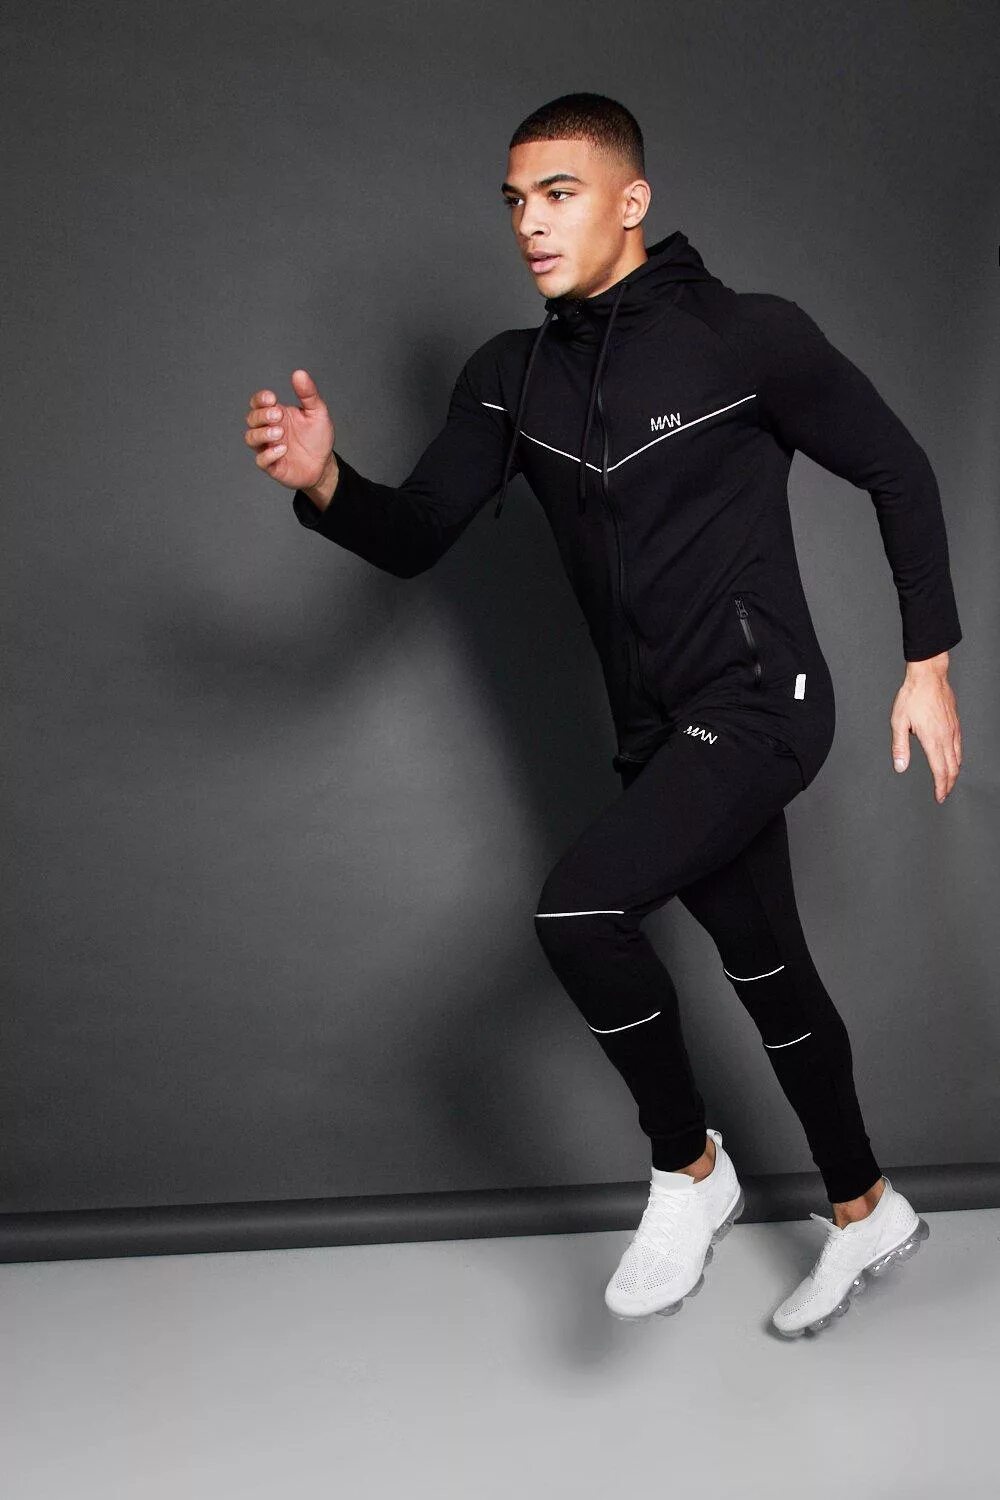 Облегающий спортивный костюм. Tracksuits for men Nike. Nike Mens Wear. Спортивка мужской найк 2020. Nike Sportswear Sport Essentials спортивный костюм.